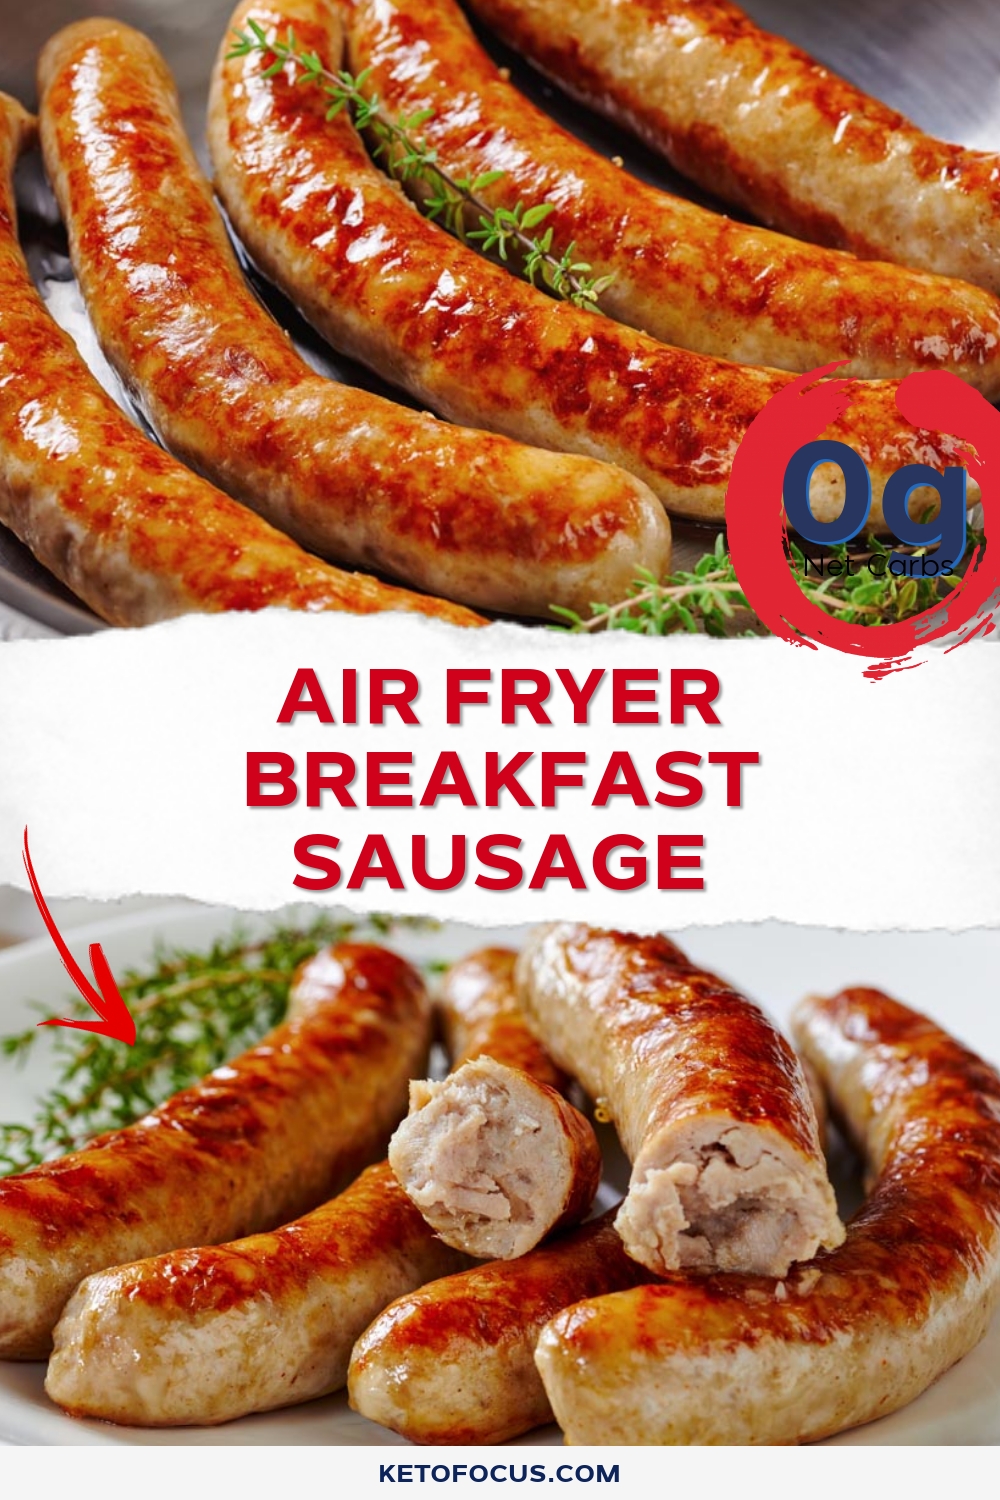 Air fryer breakfast sausage